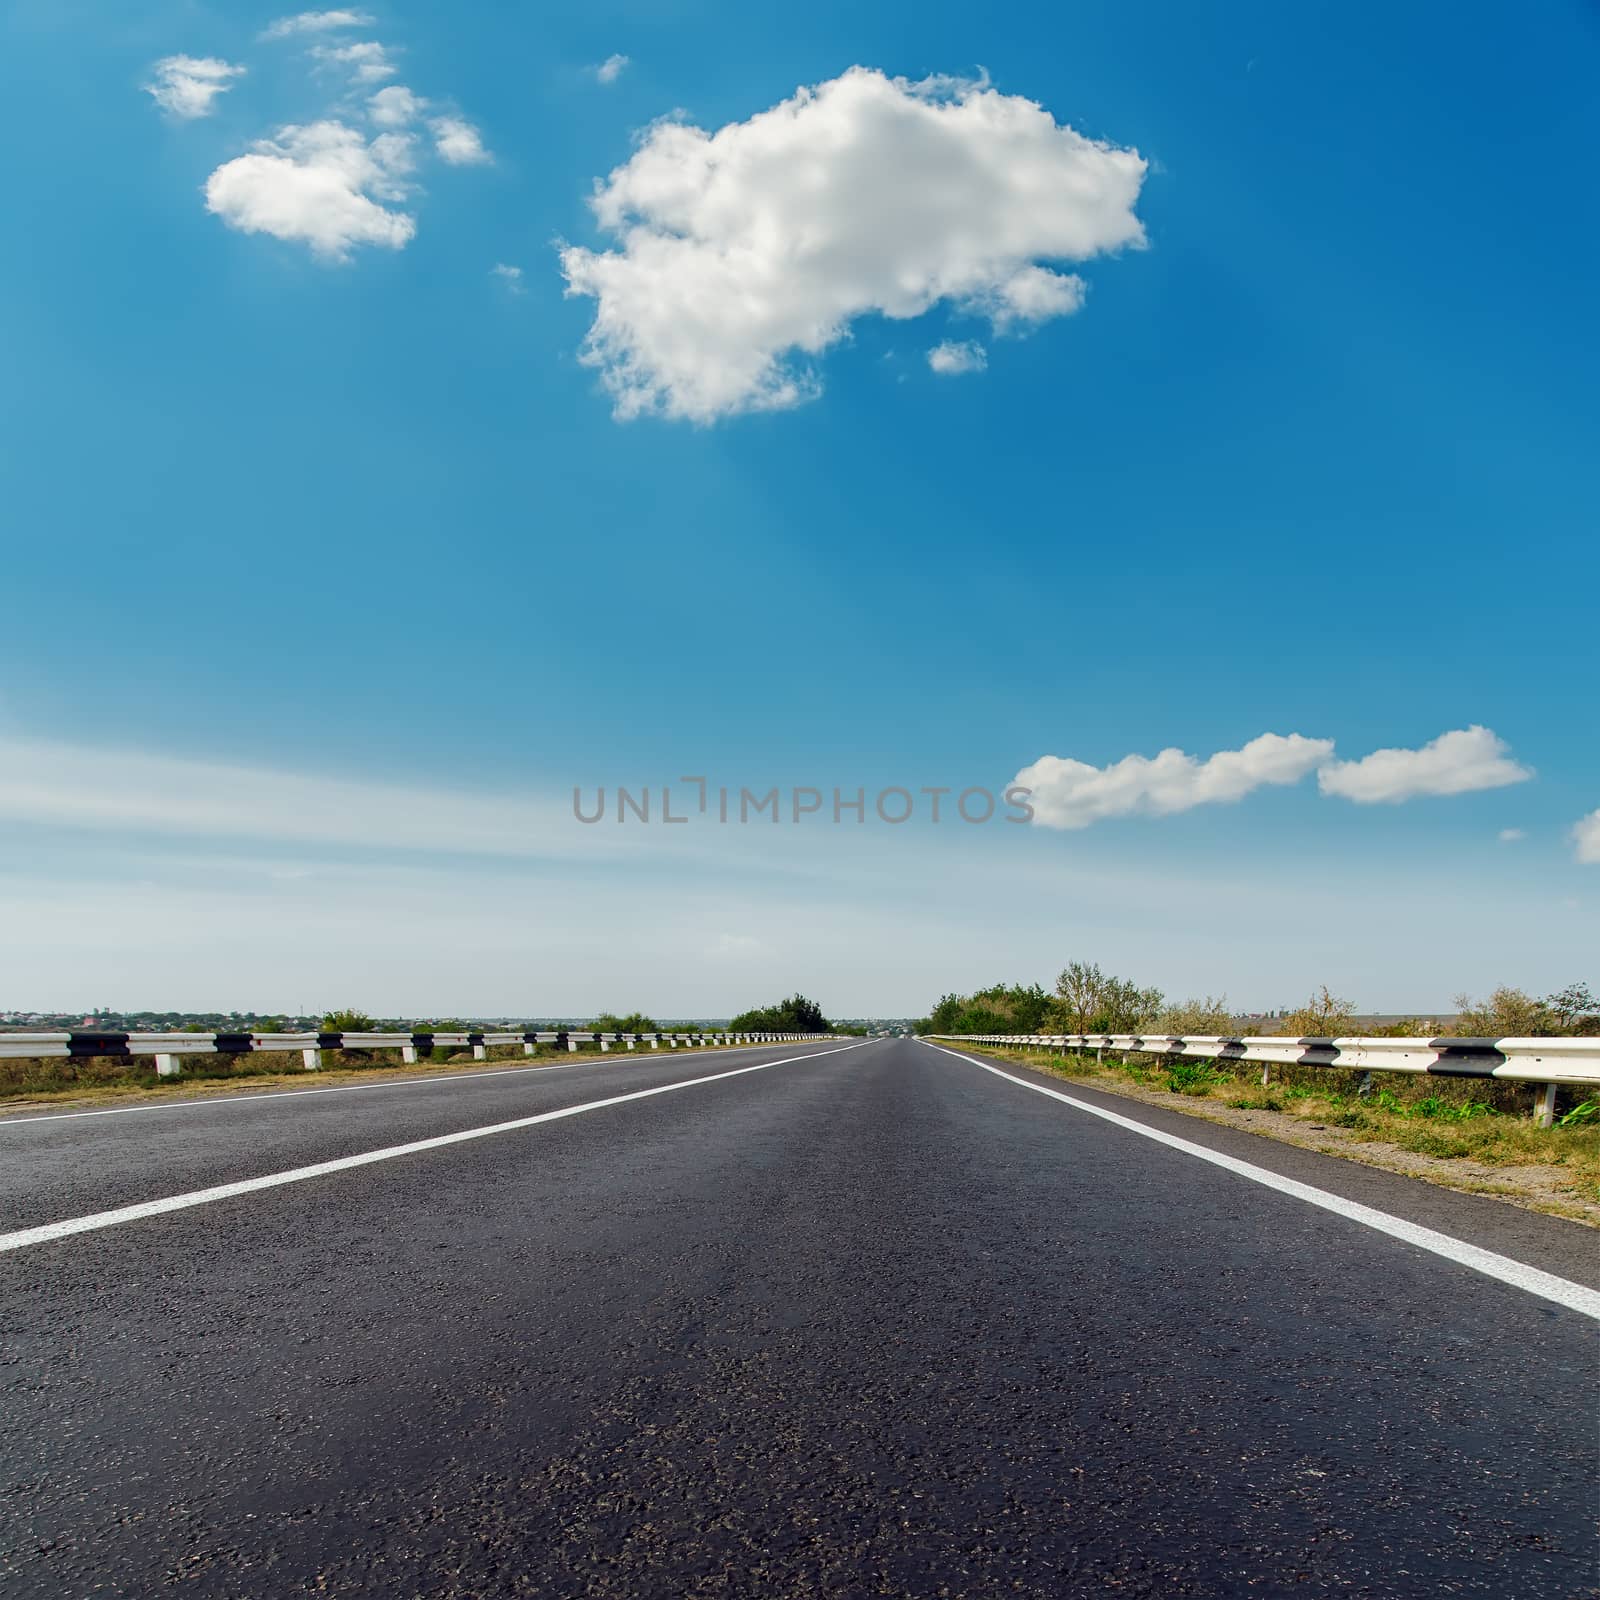 asphalt road to horizon under blue cloudy sky by mycola